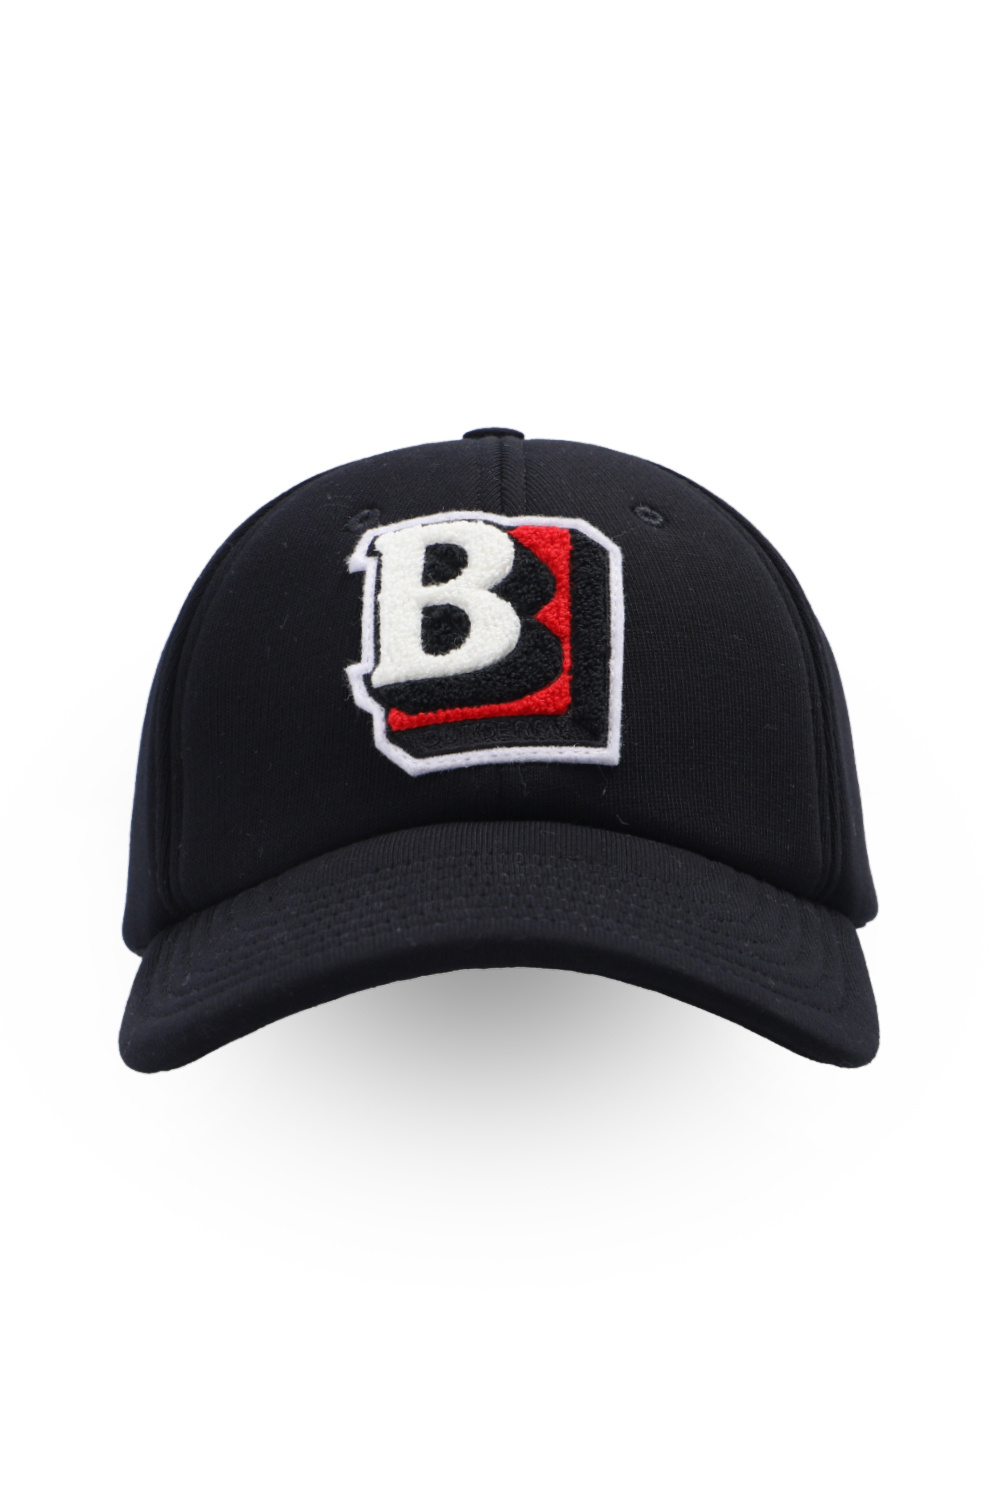 burberry and Baseball cap